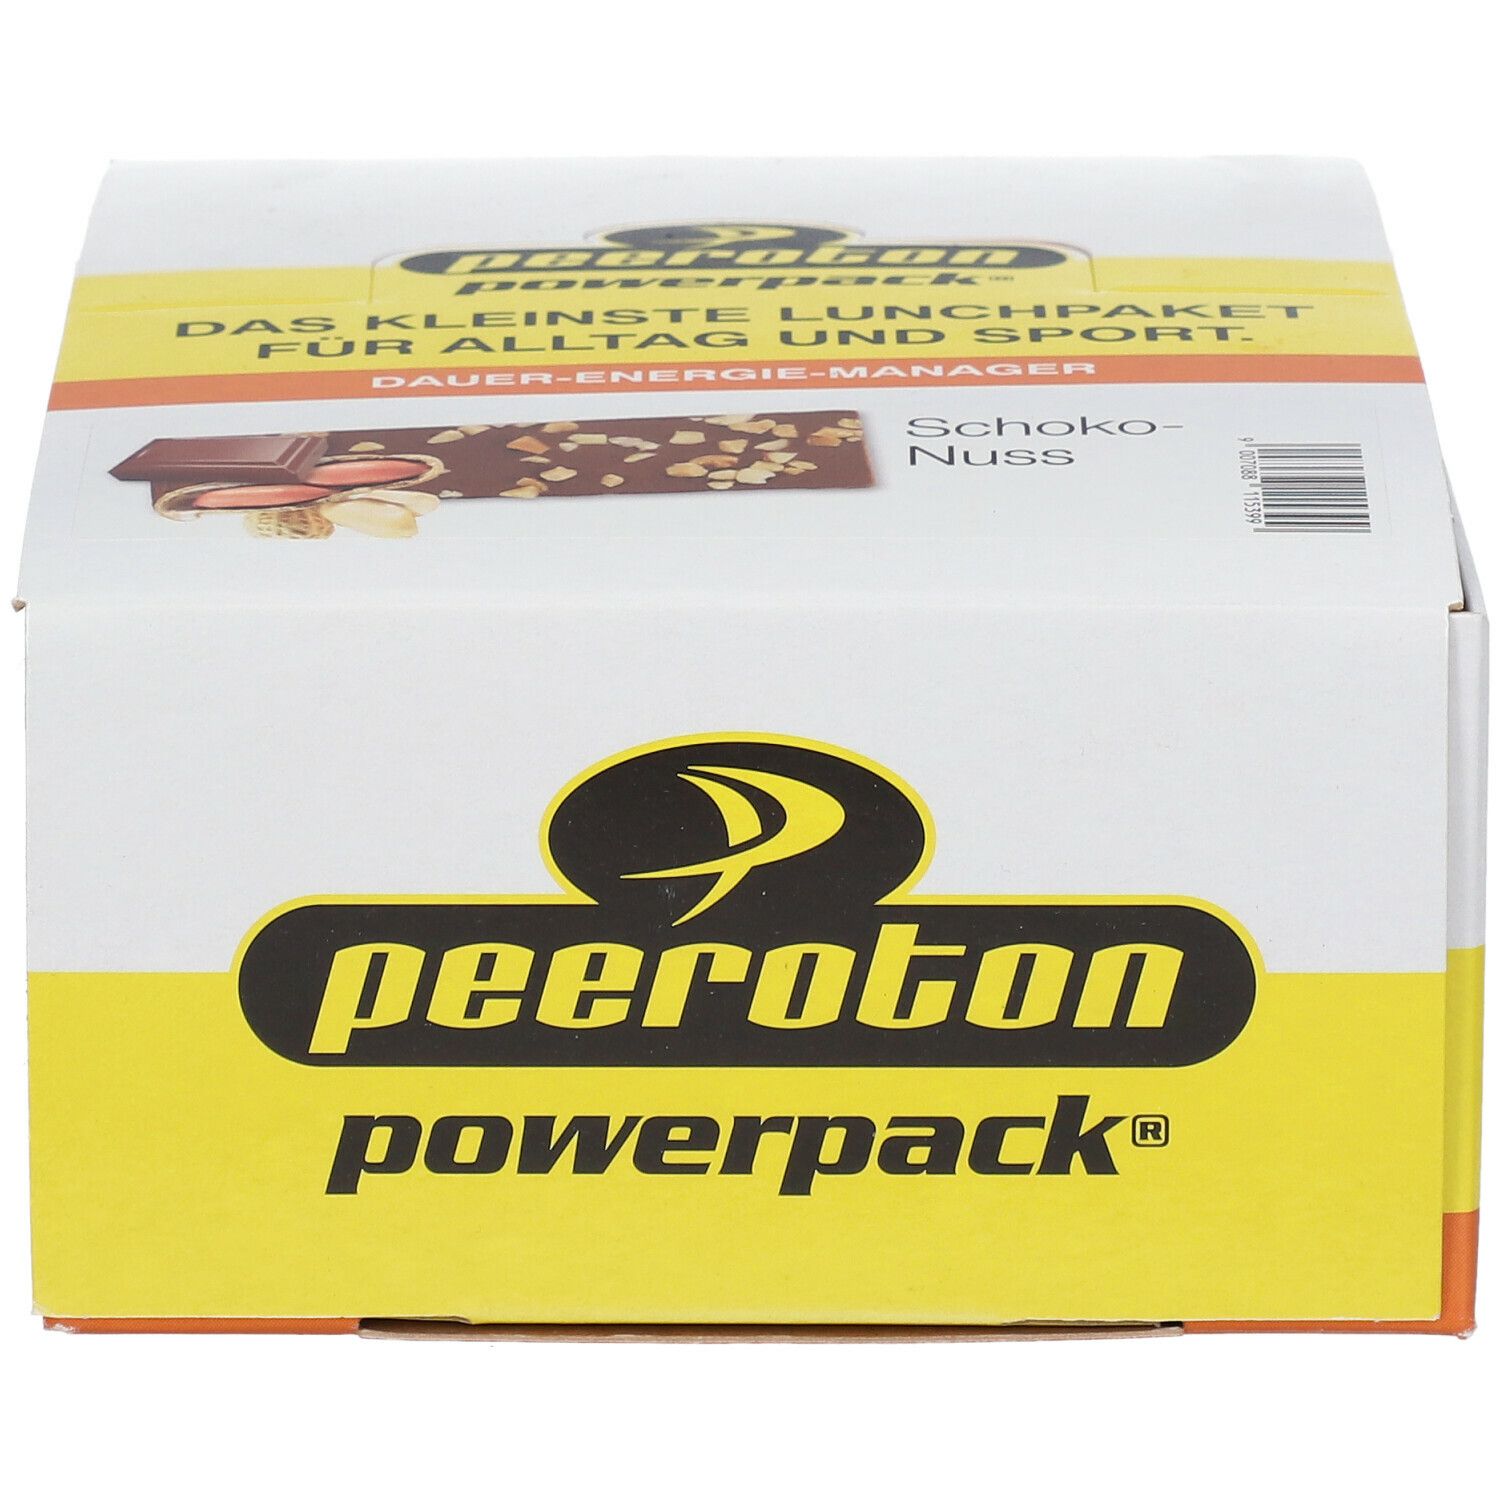 peeroton® Powerpack Riegel Schoko Nuss